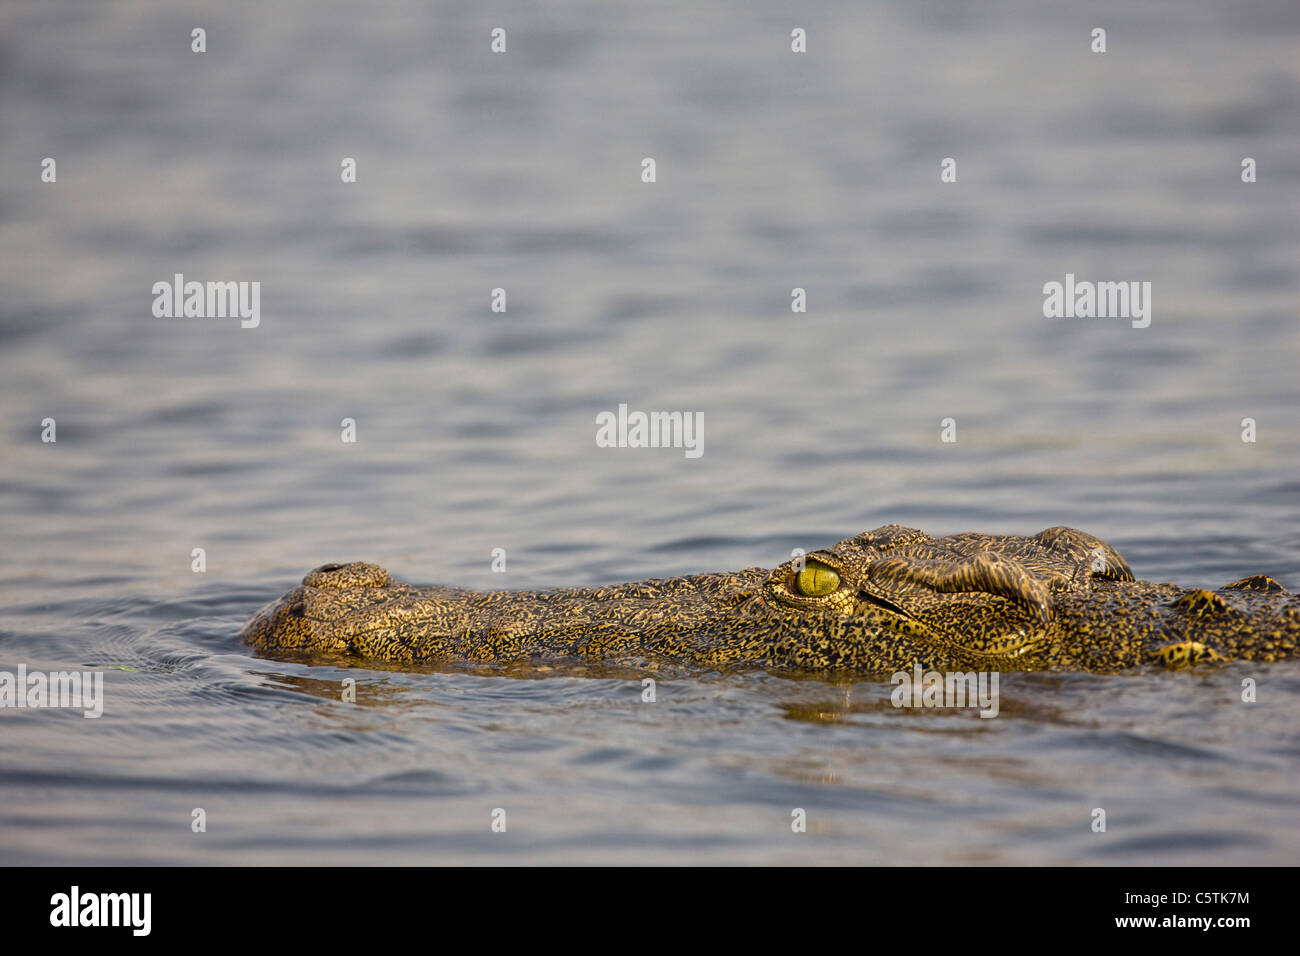 Africa, Botswana, Nile crocodile (Crocodylus niloticus) in water, close-up Stock Photo